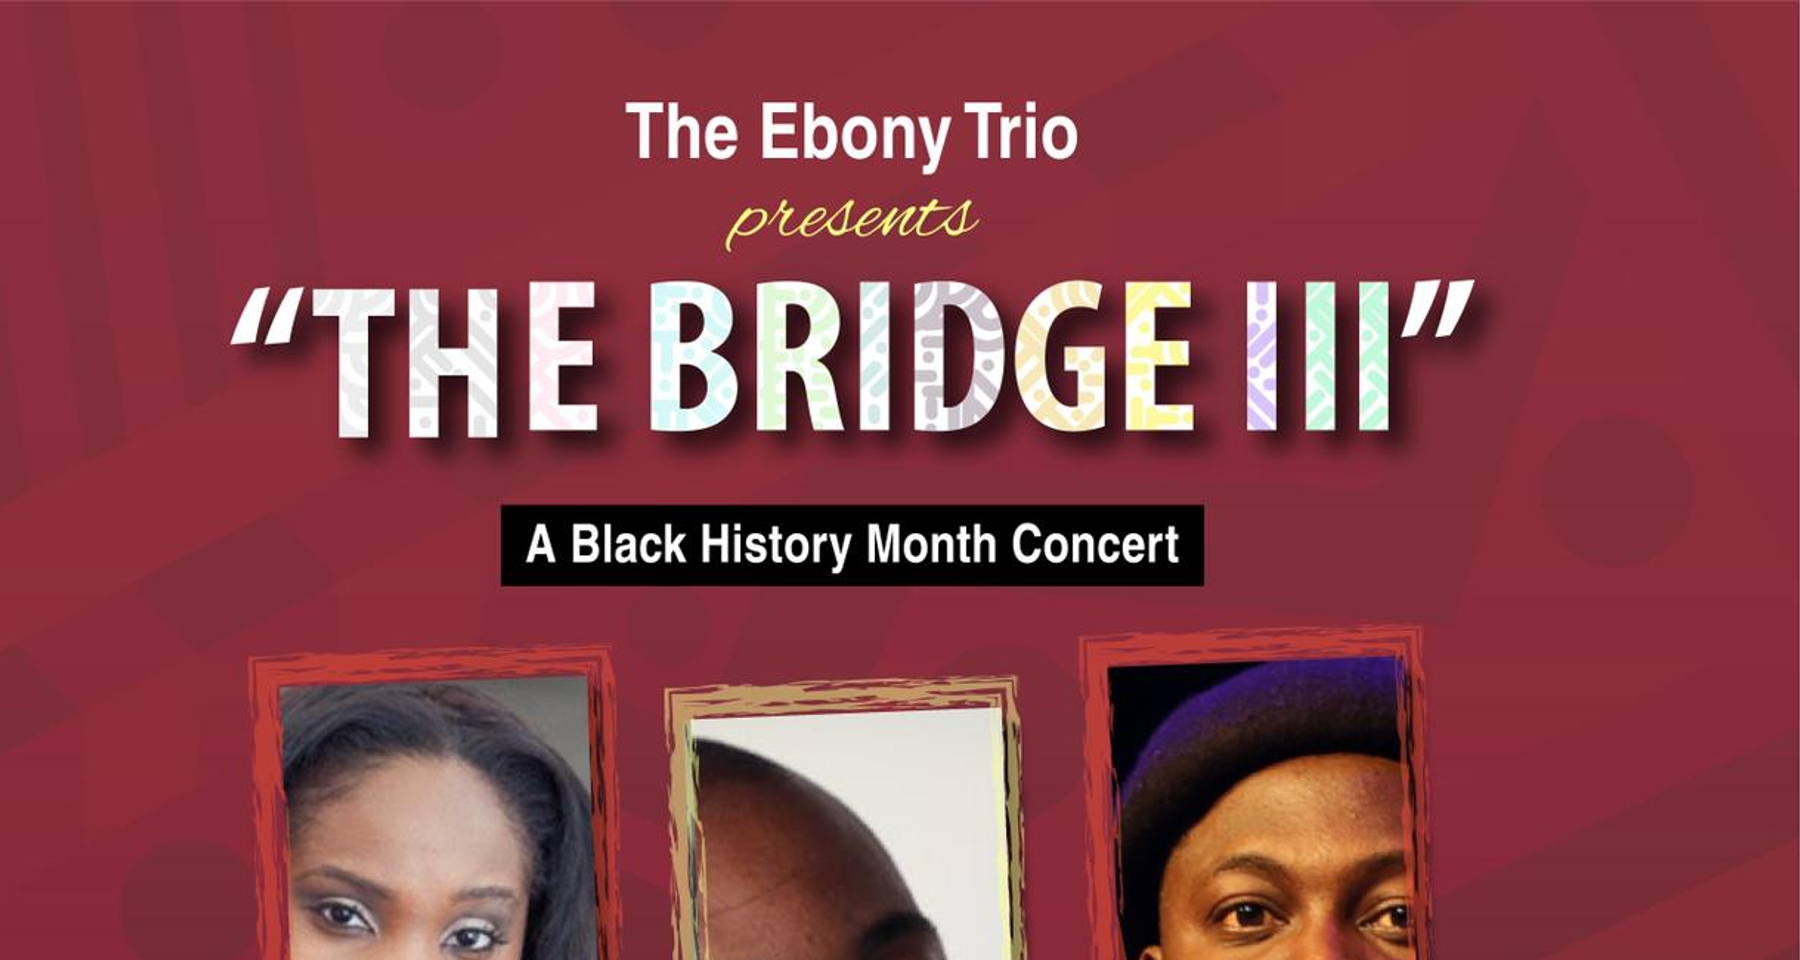 The Bridge Concert III (A Black History Month Concert)